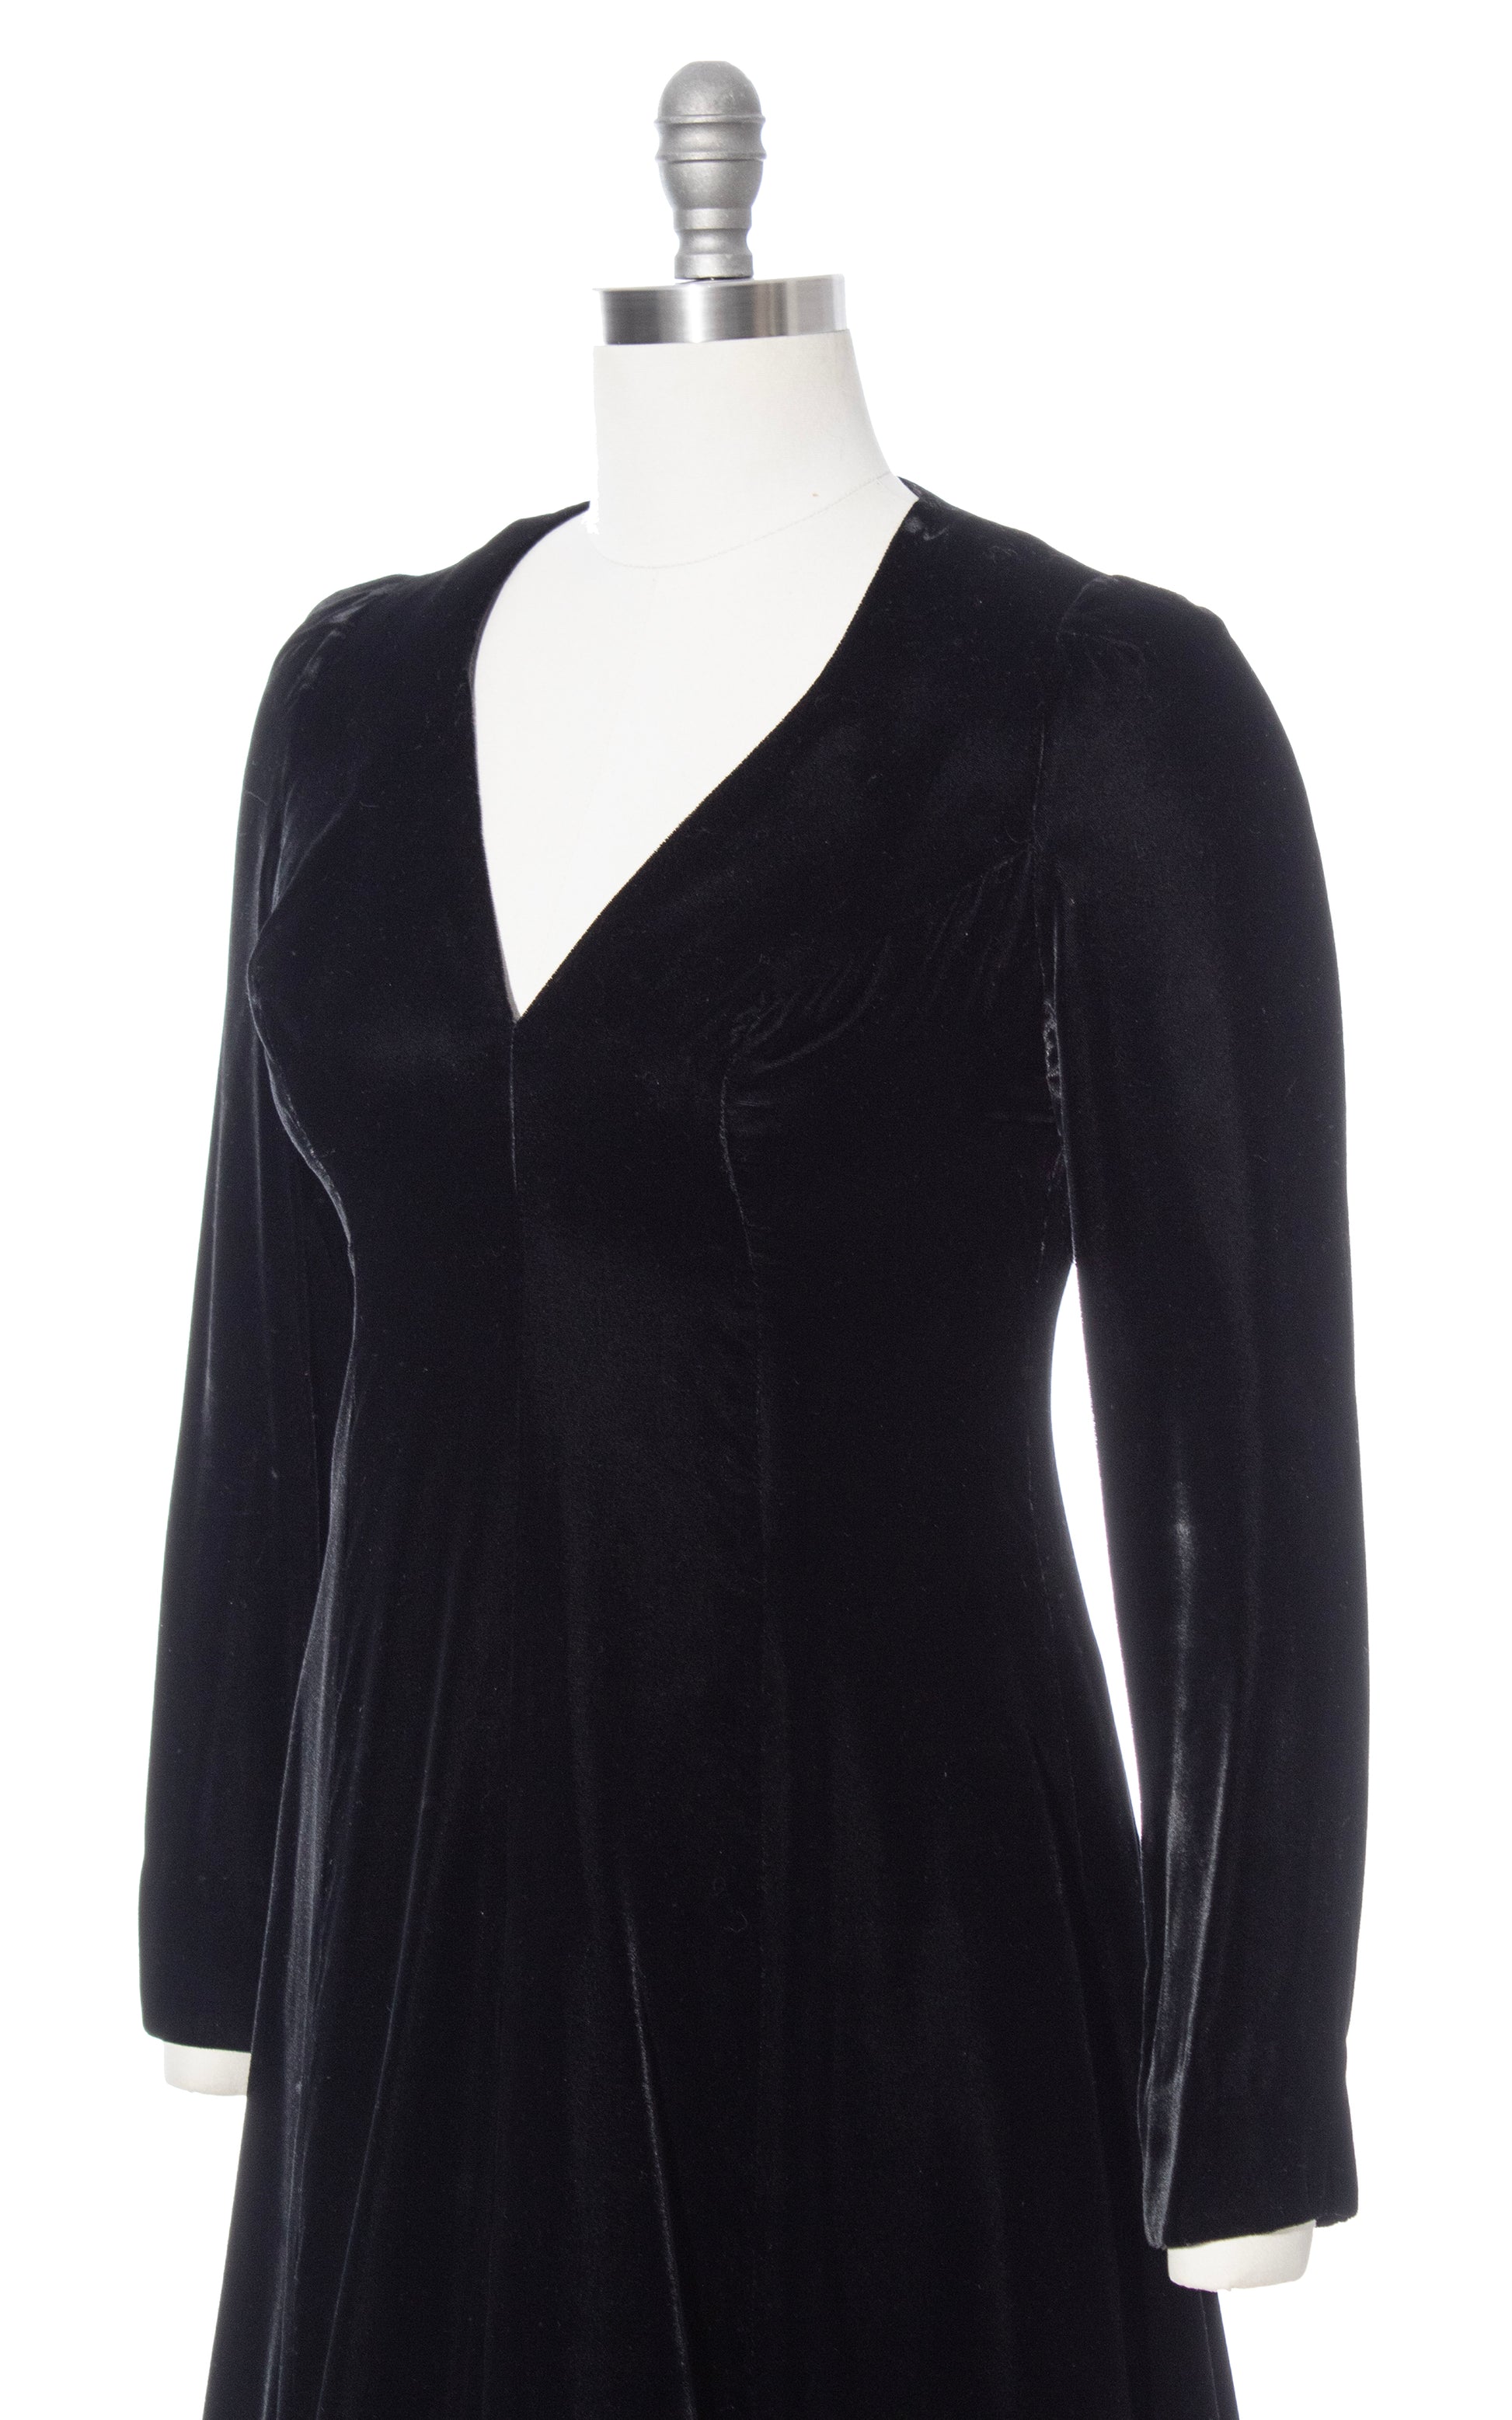 Vintage 60s 1960s MISS ELLIETTE Feathered Black Velvet Dress BirthdayLifeVintage